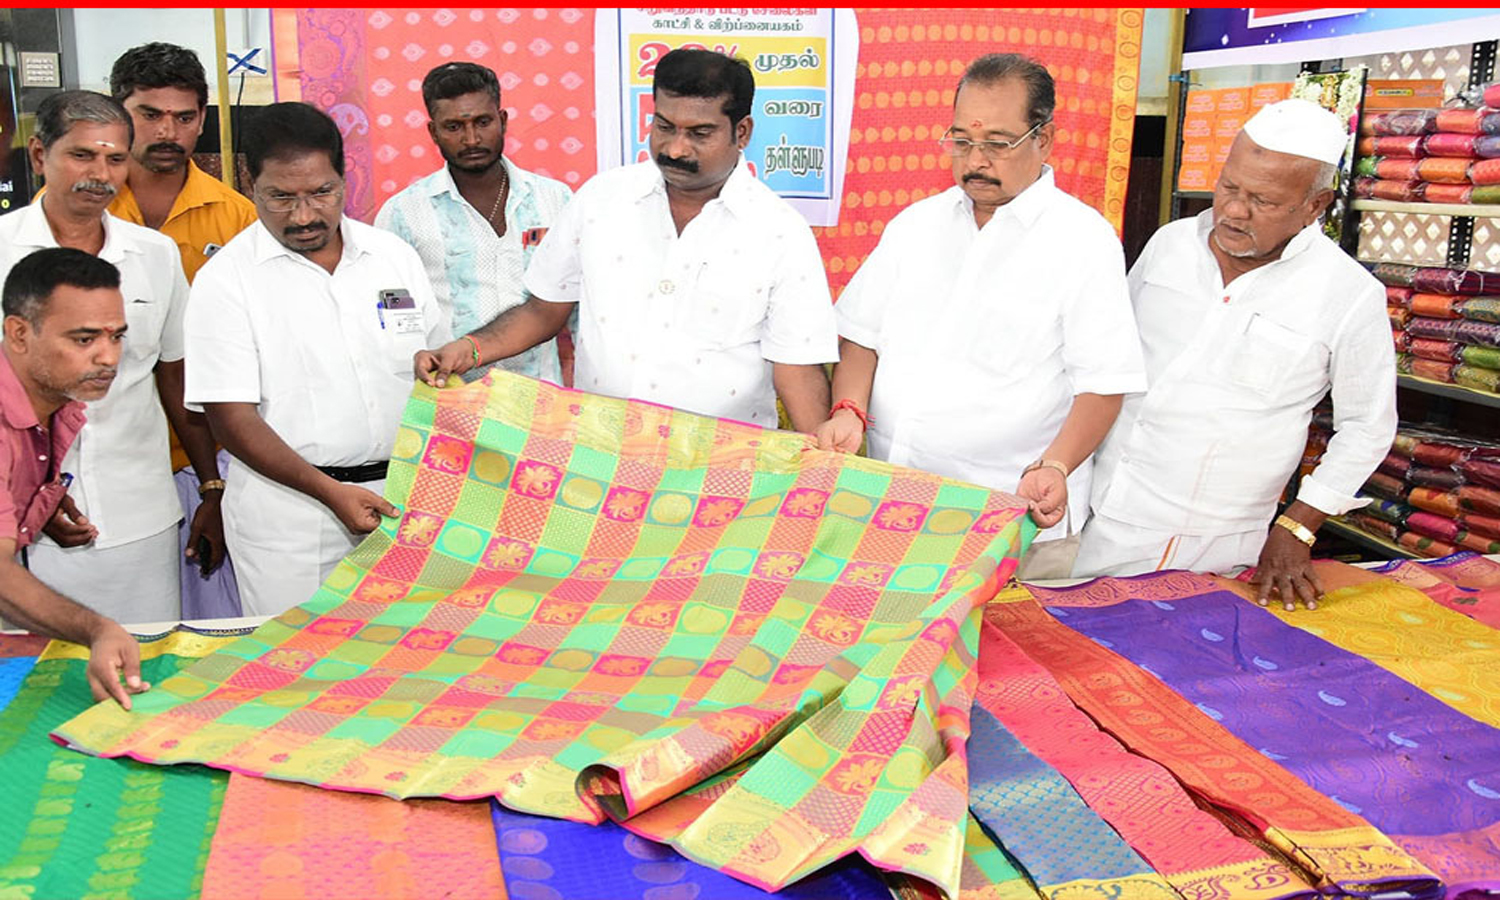 Pure kanchipuram handloom pattu sarees Silk mark certified saree Tissue   Price19000 DMwhatsapp at 7995499590 whatsapp link   Instagram